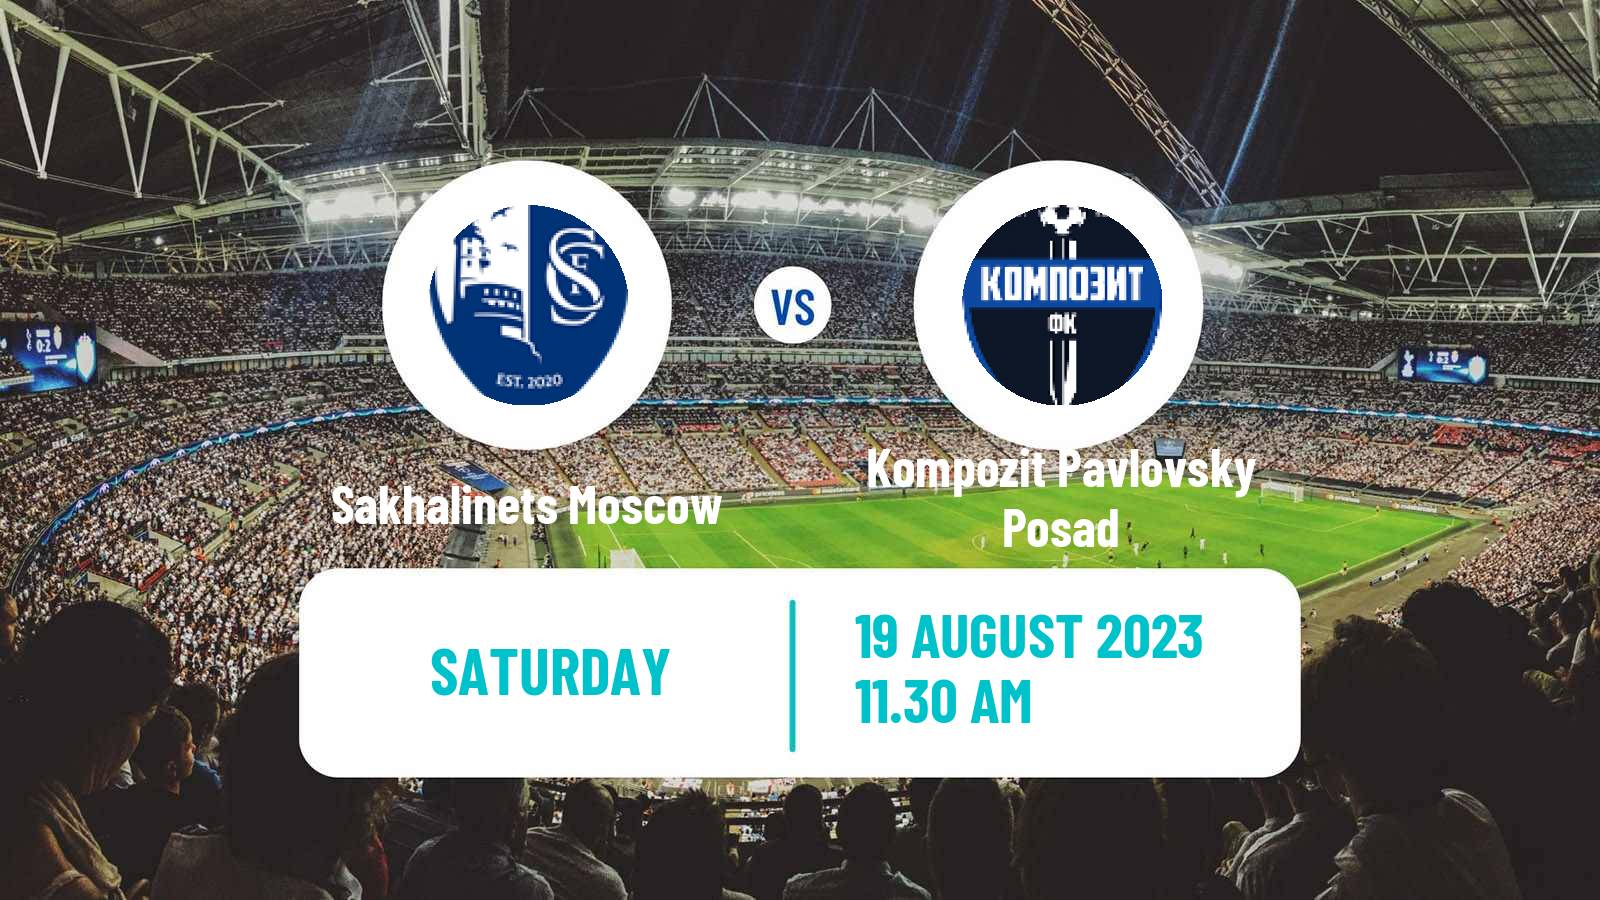 Soccer FNL 2 Division B Group 3 Sakhalinets Moscow - Kompozit Pavlovsky Posad